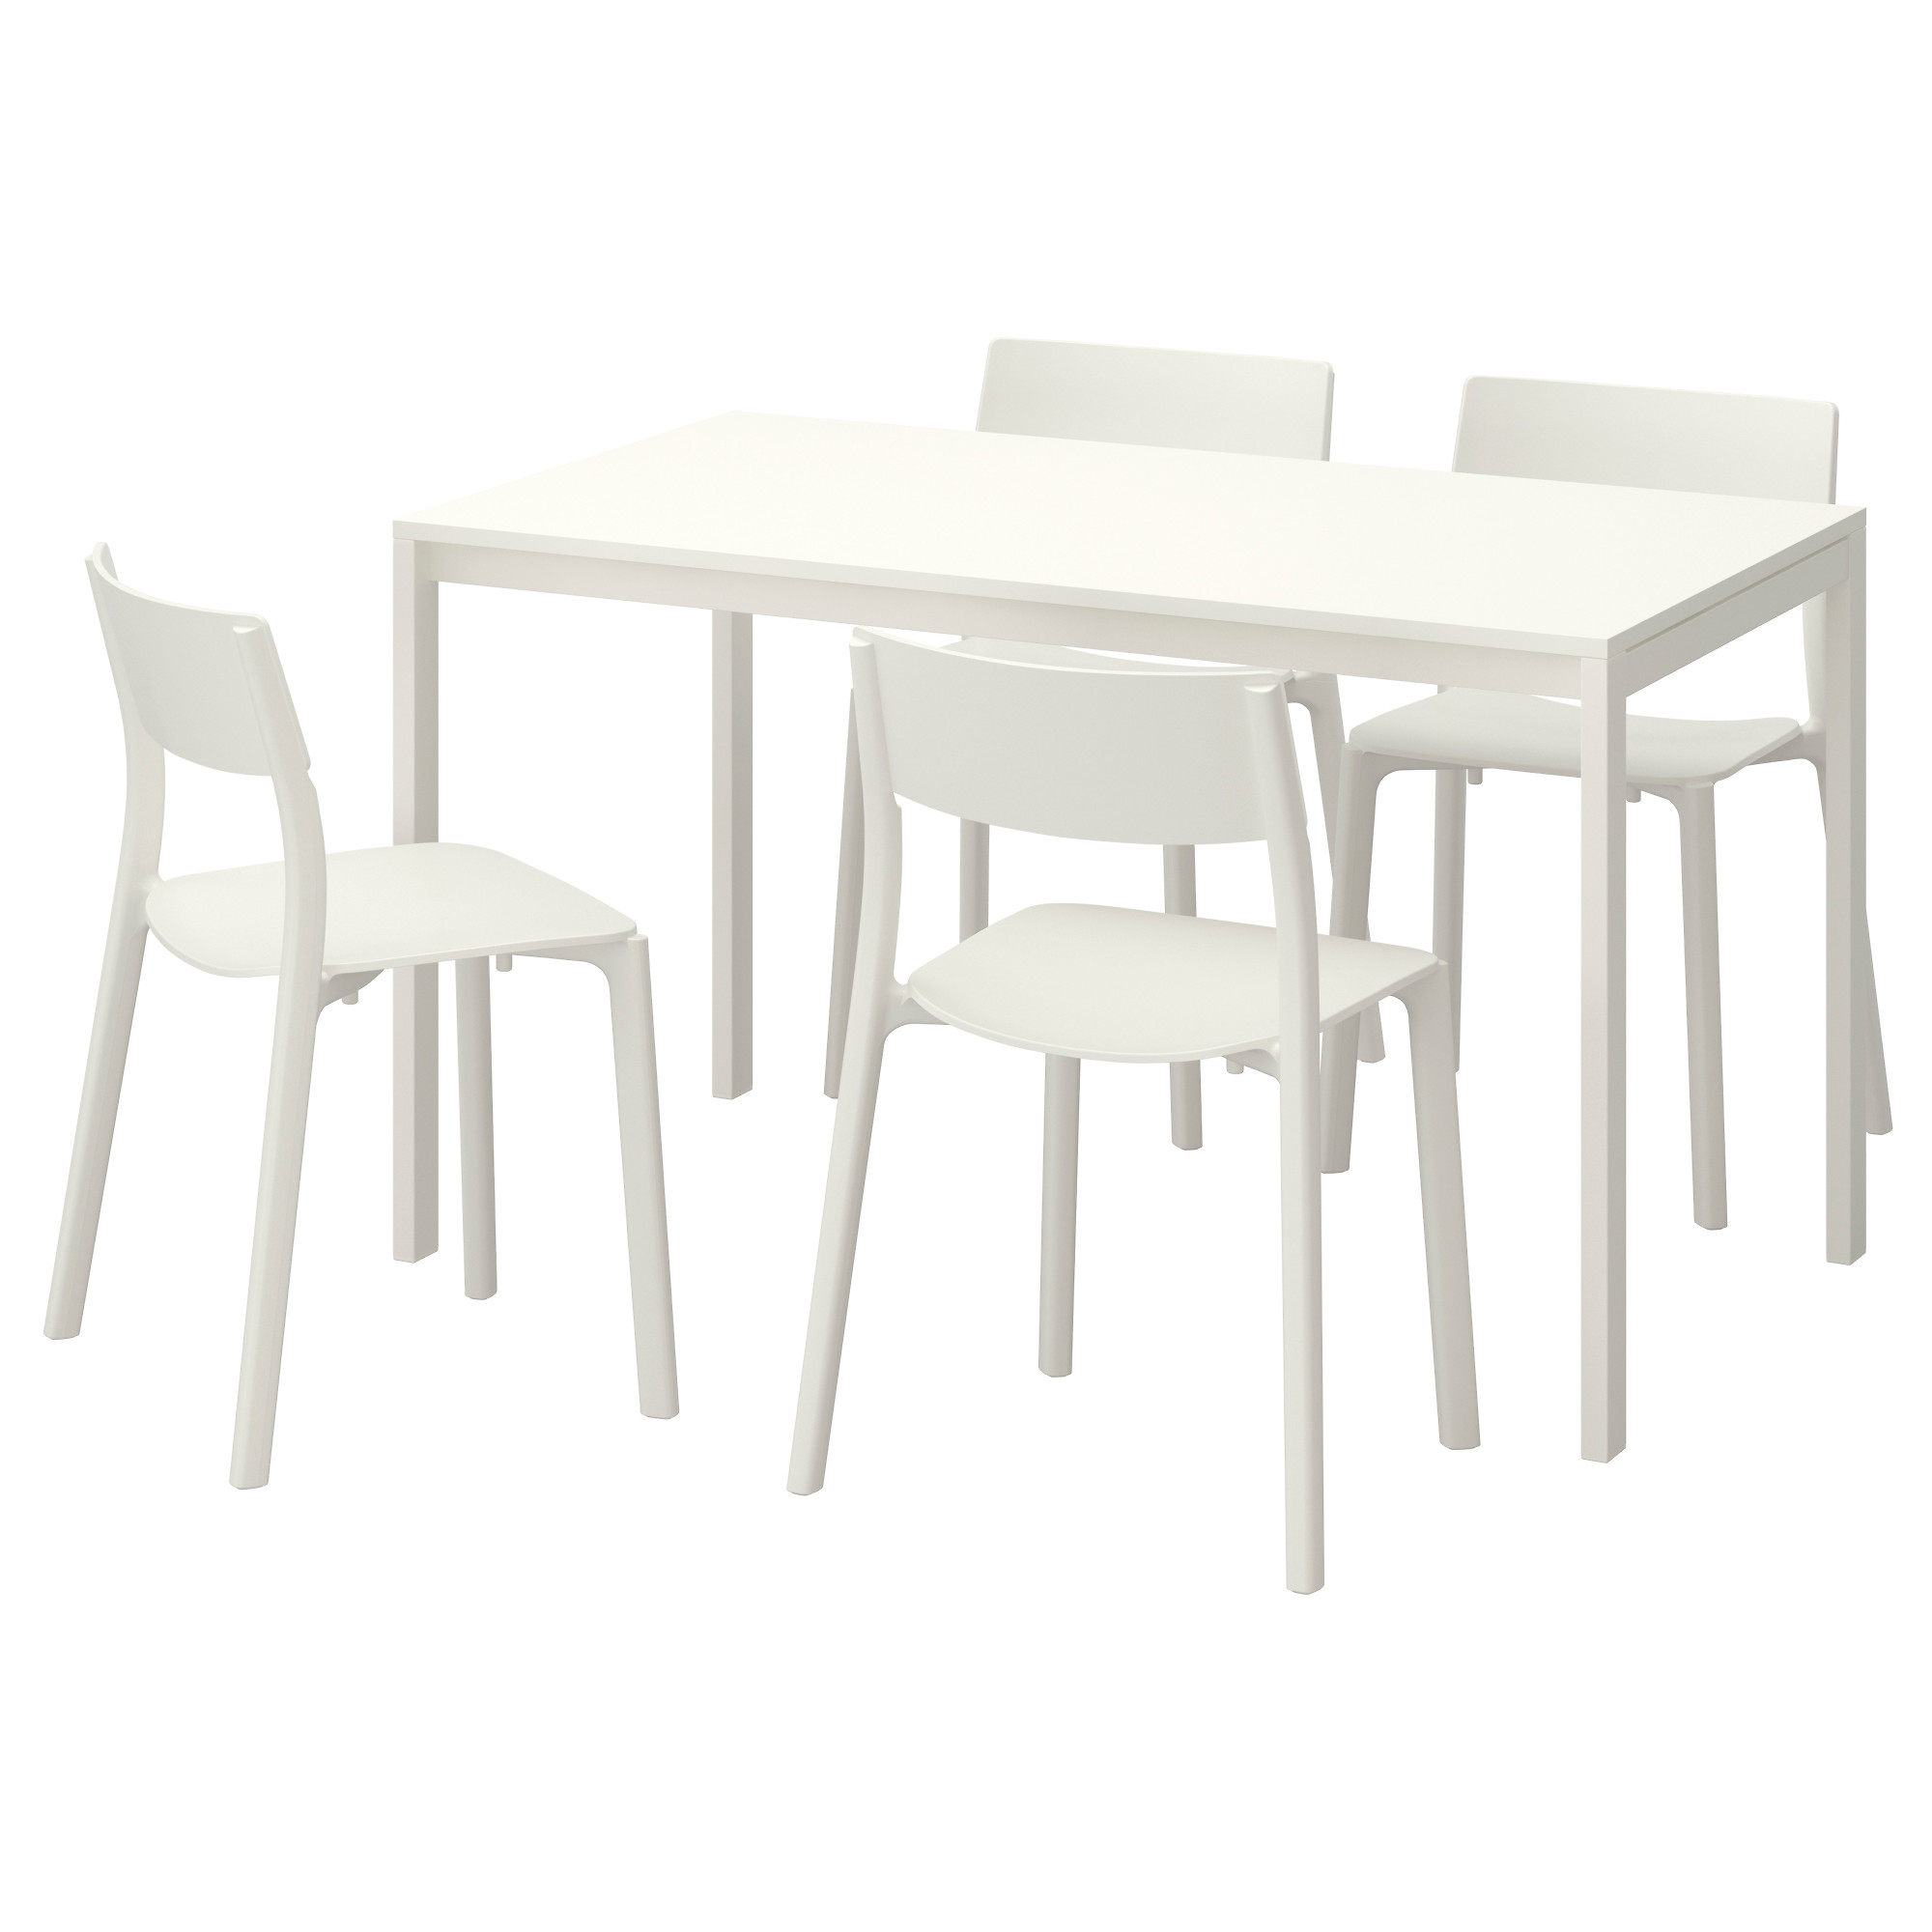 Ikea Dining Sets Komnit Furniture, 4 Chair Dining Table Set Ikea